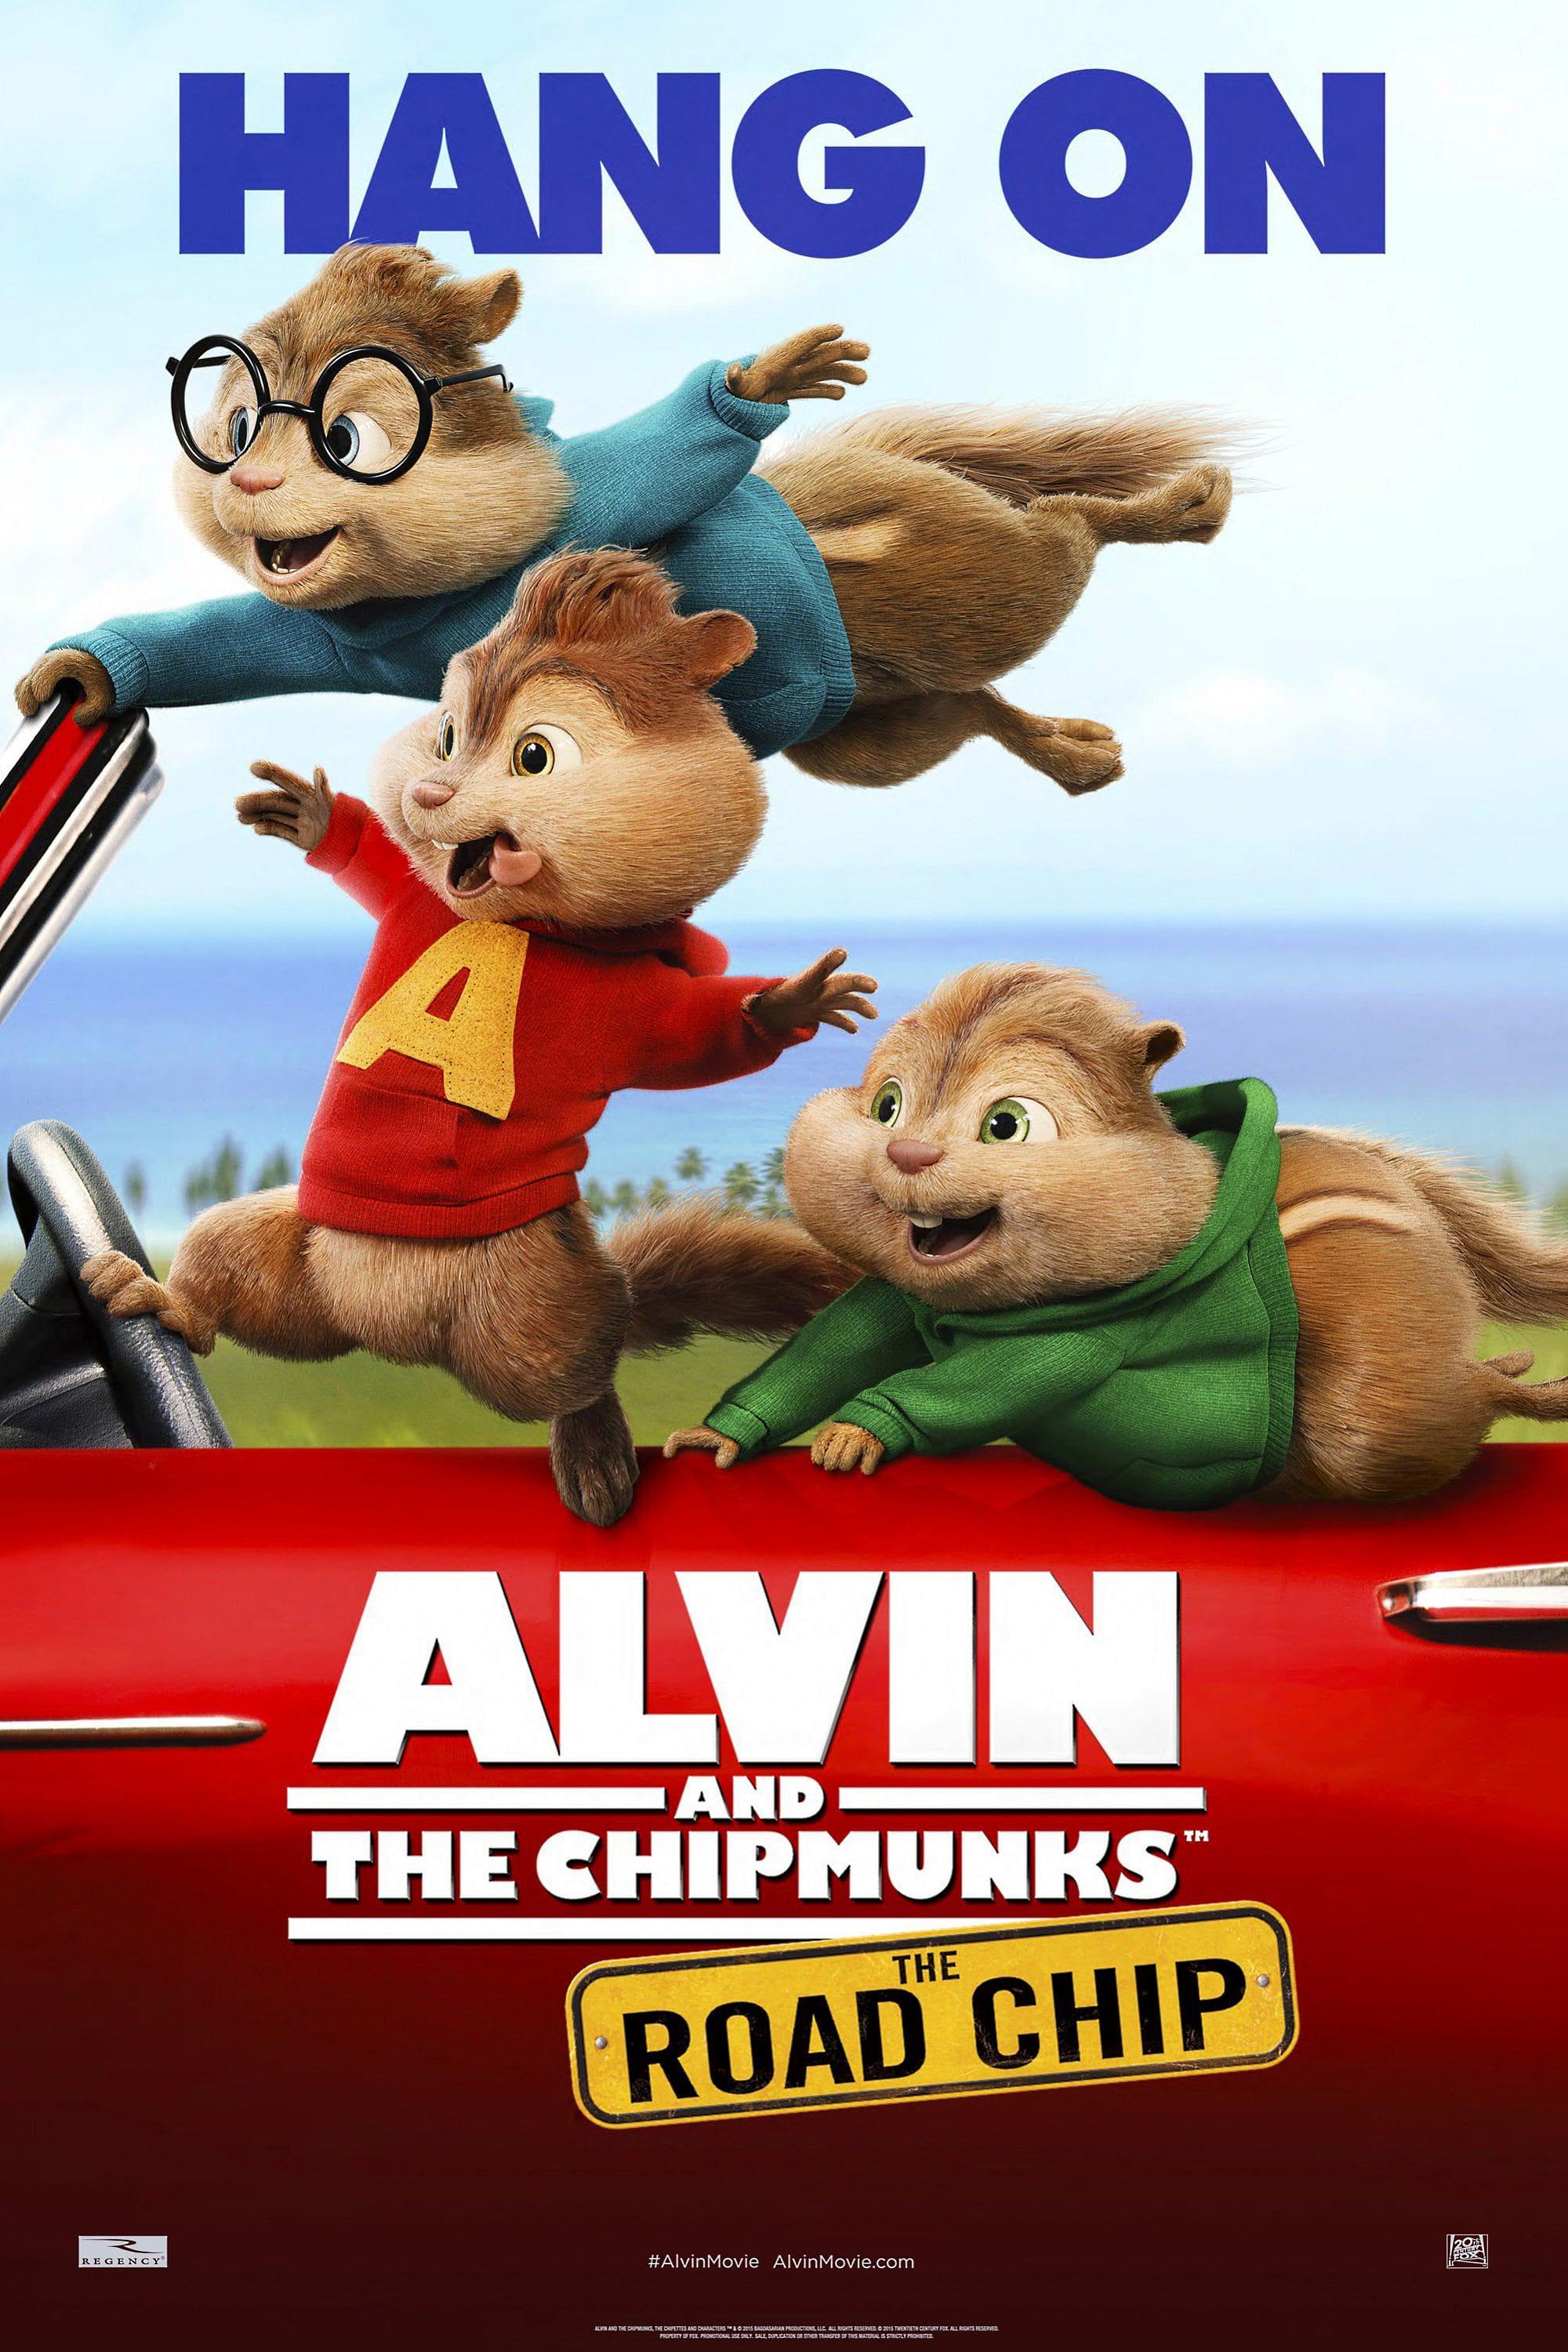 Nonton film Alvin and the Chipmunks The Road Chip layarkaca21 indoxx1 ganool online streaming terbaru